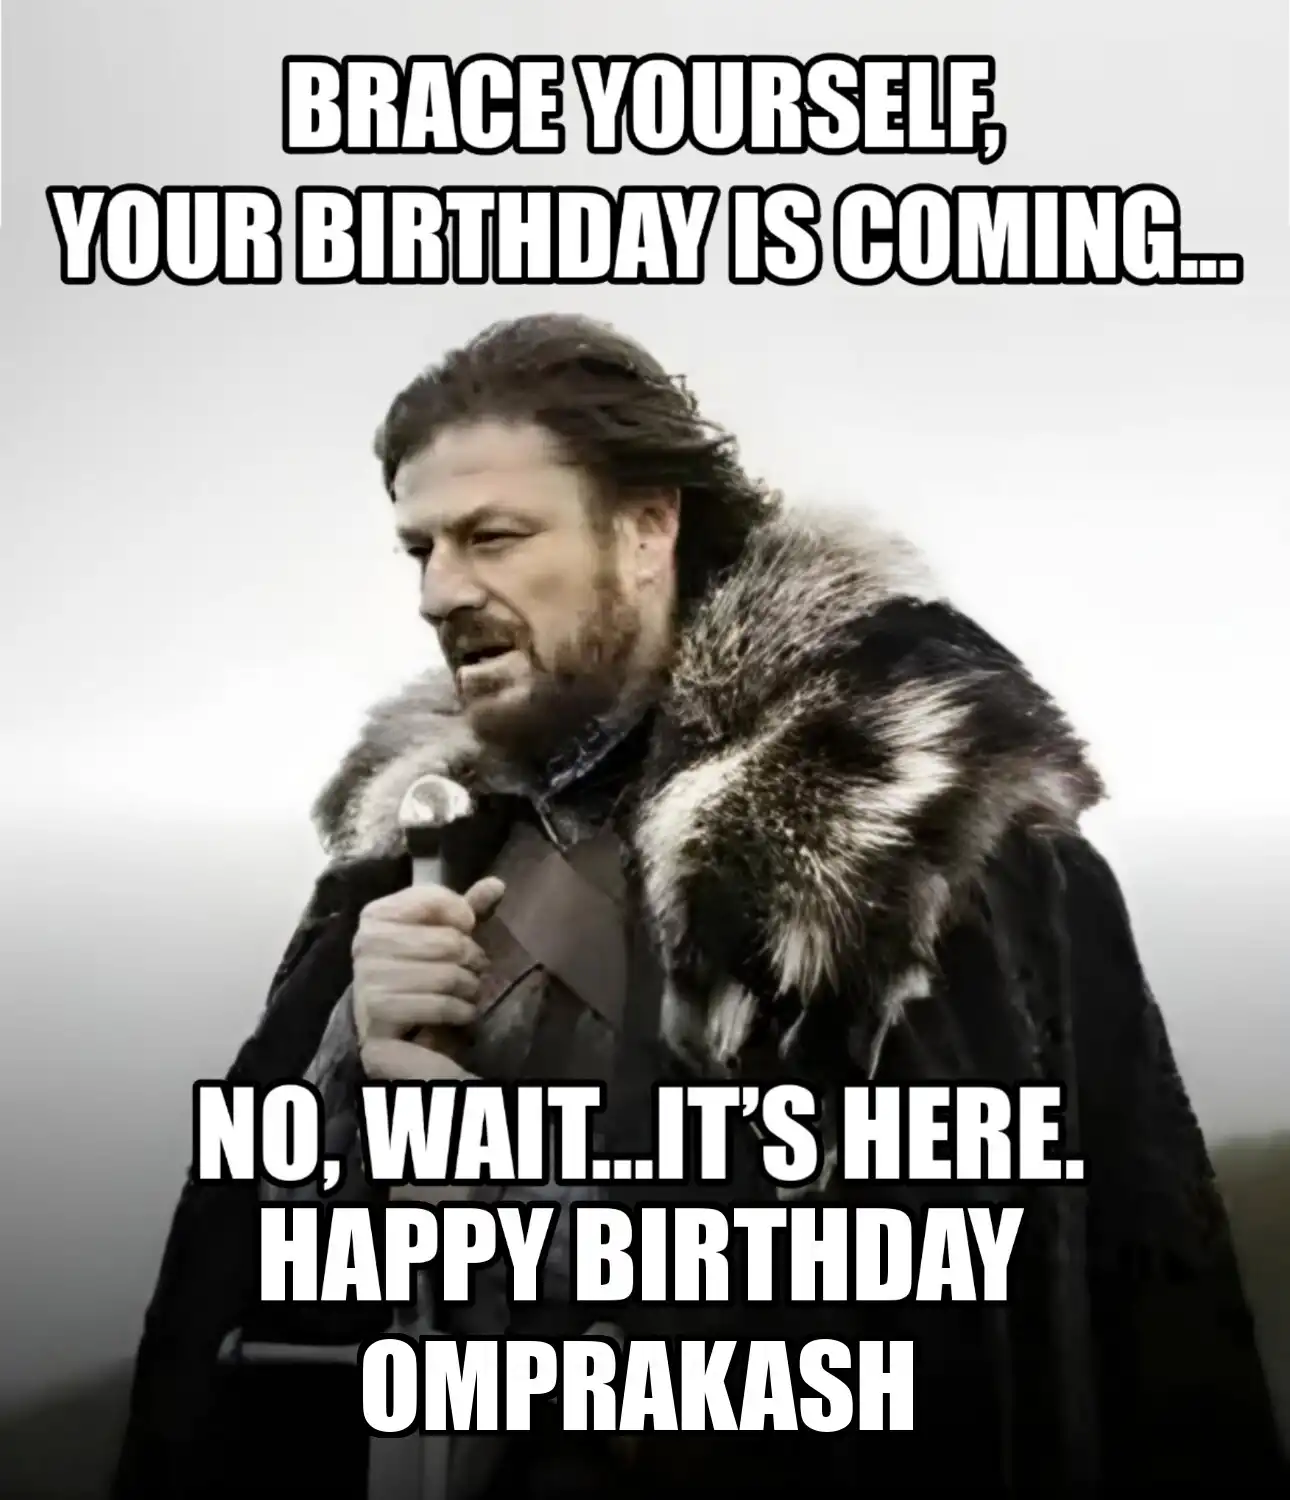 Happy Birthday Omprakash Brace Yourself Your Birthday Is Coming Meme